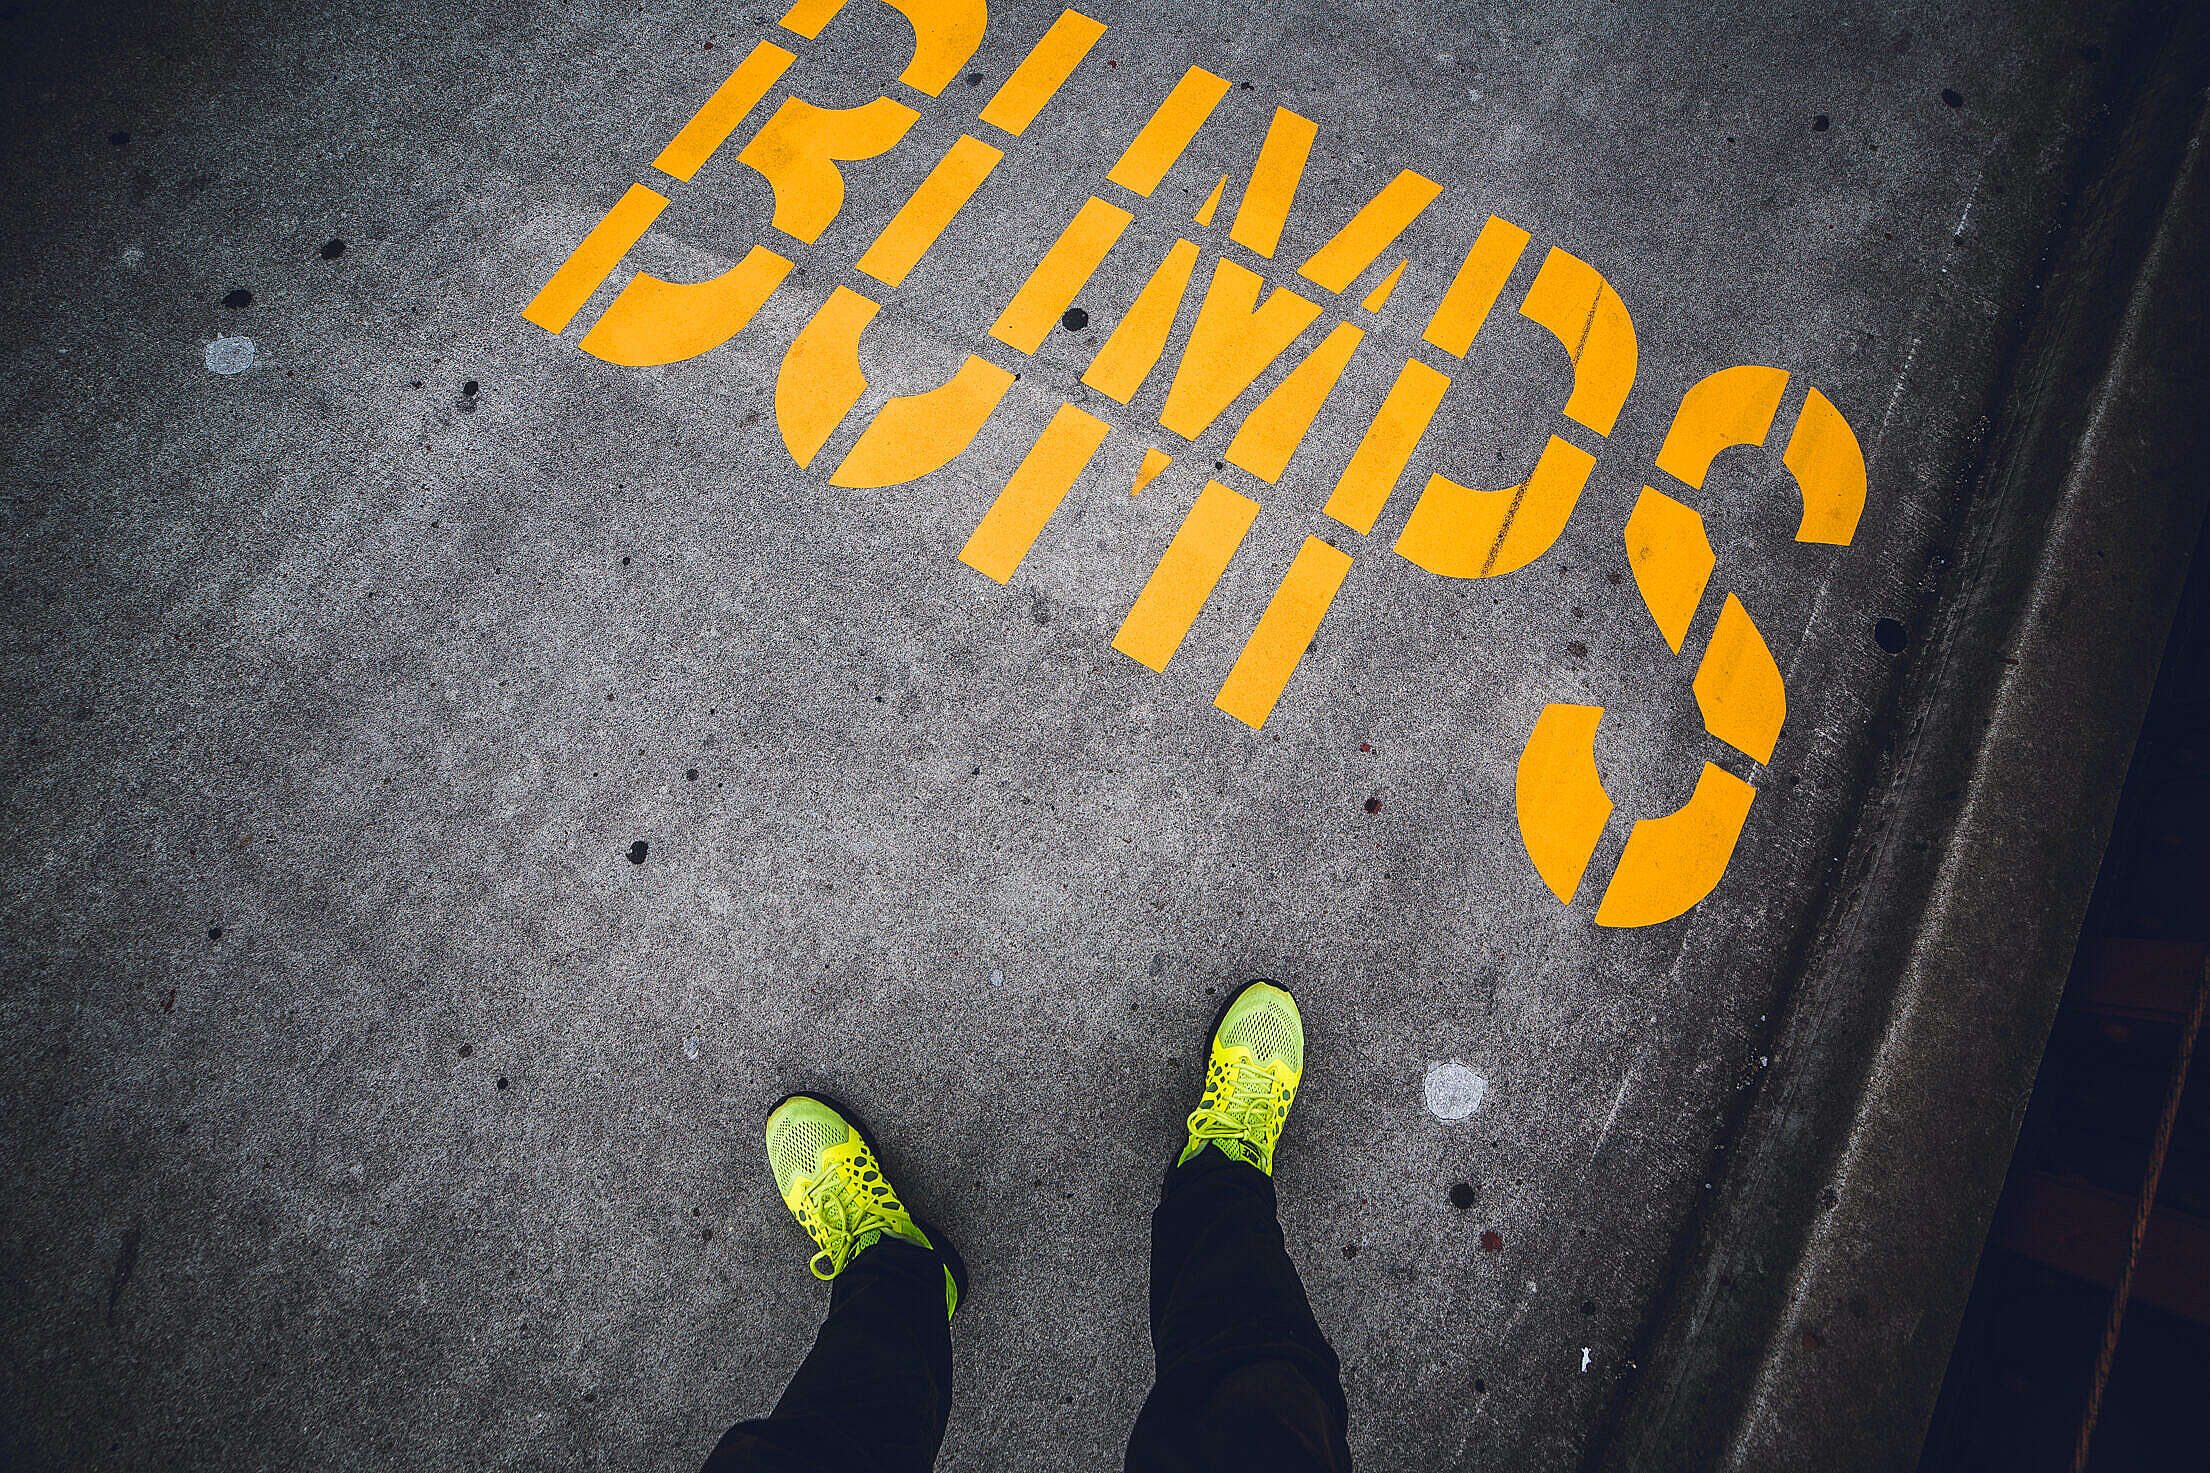 BUMPS Yellow Sidewalk Road Marking Free Stock Photo